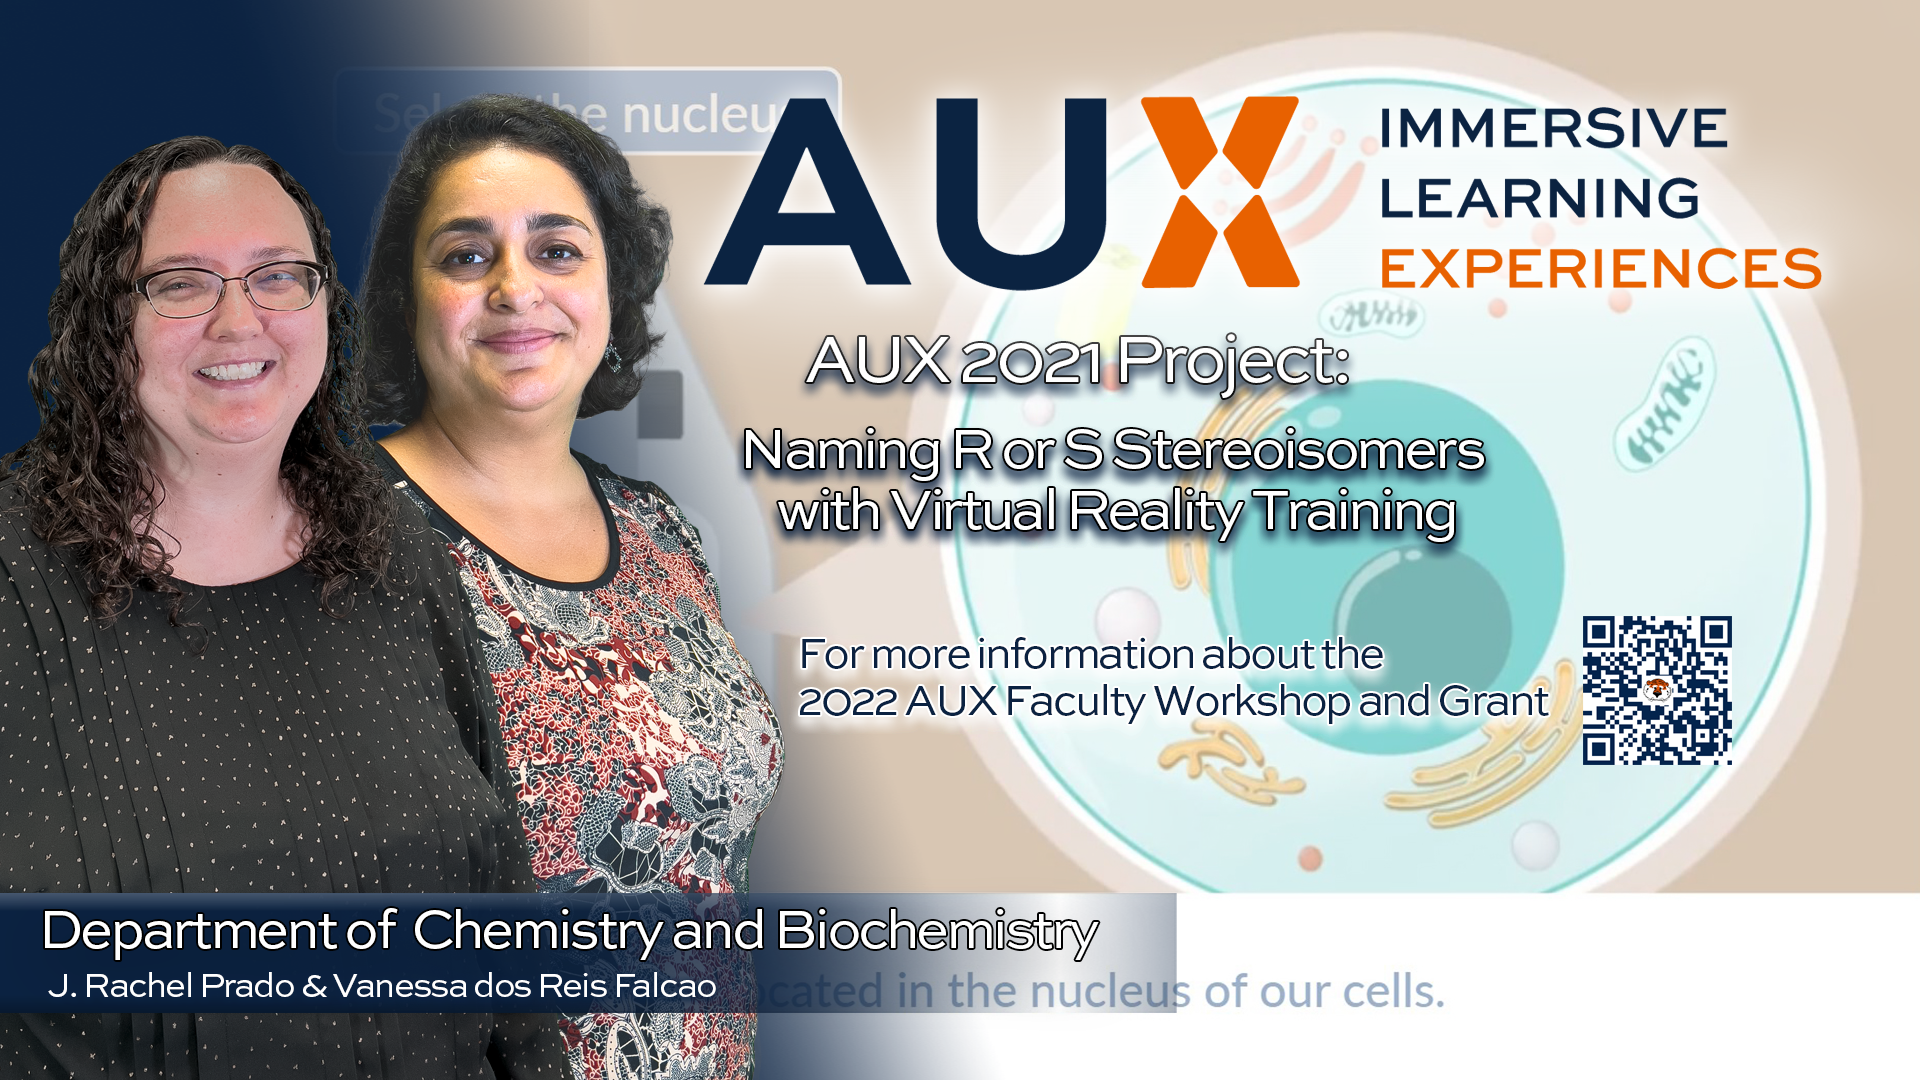  AUX: Immersive Learning Experiences Workshop 